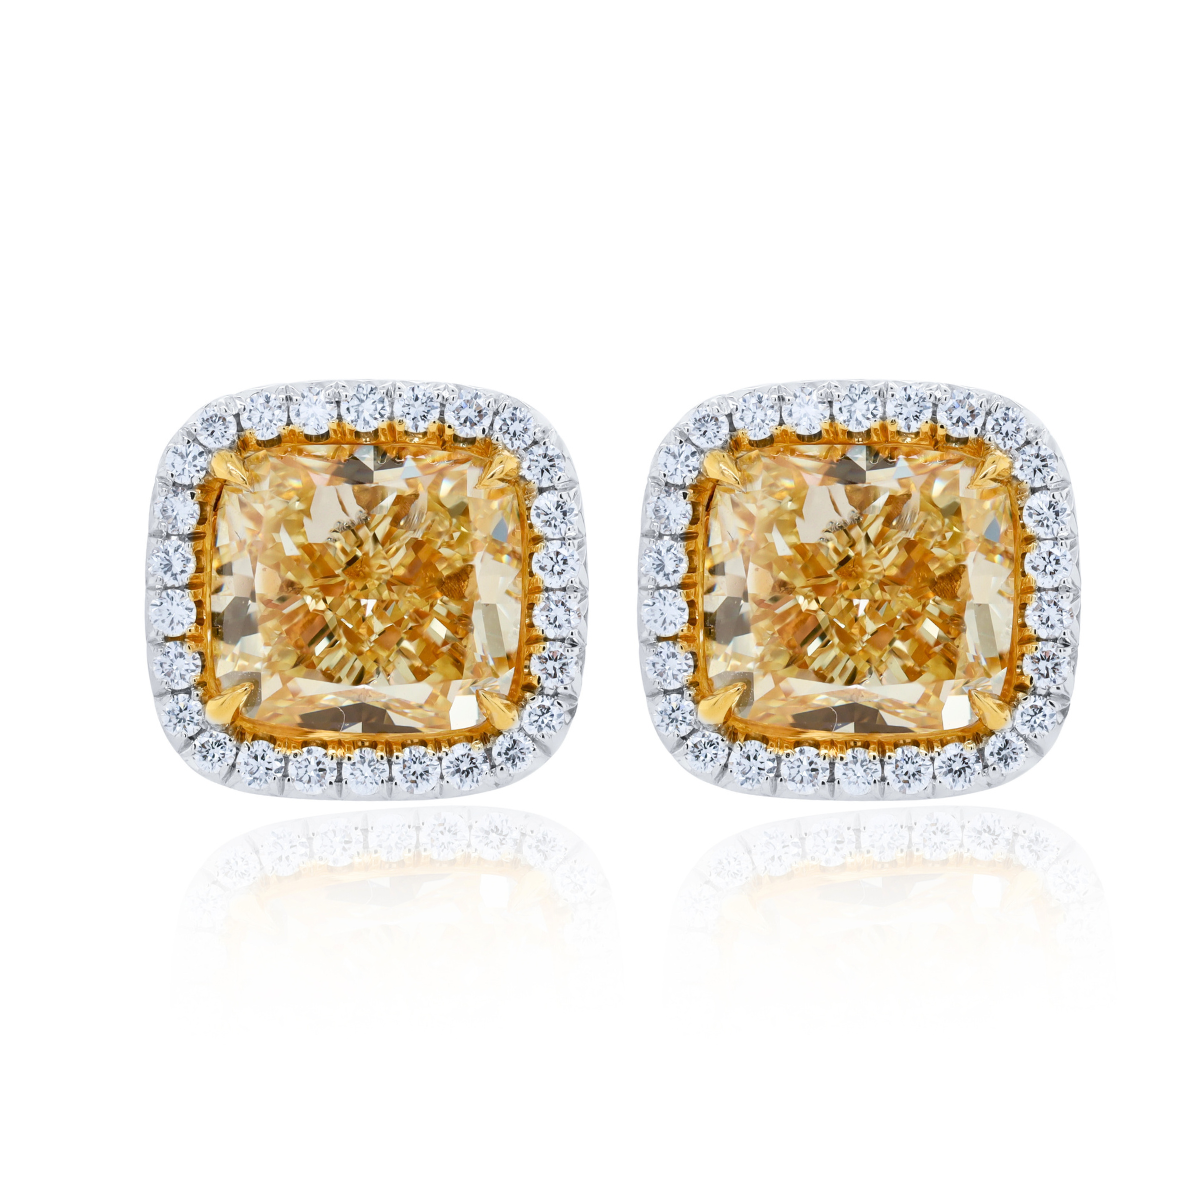 1 carat yellow diamond earrings